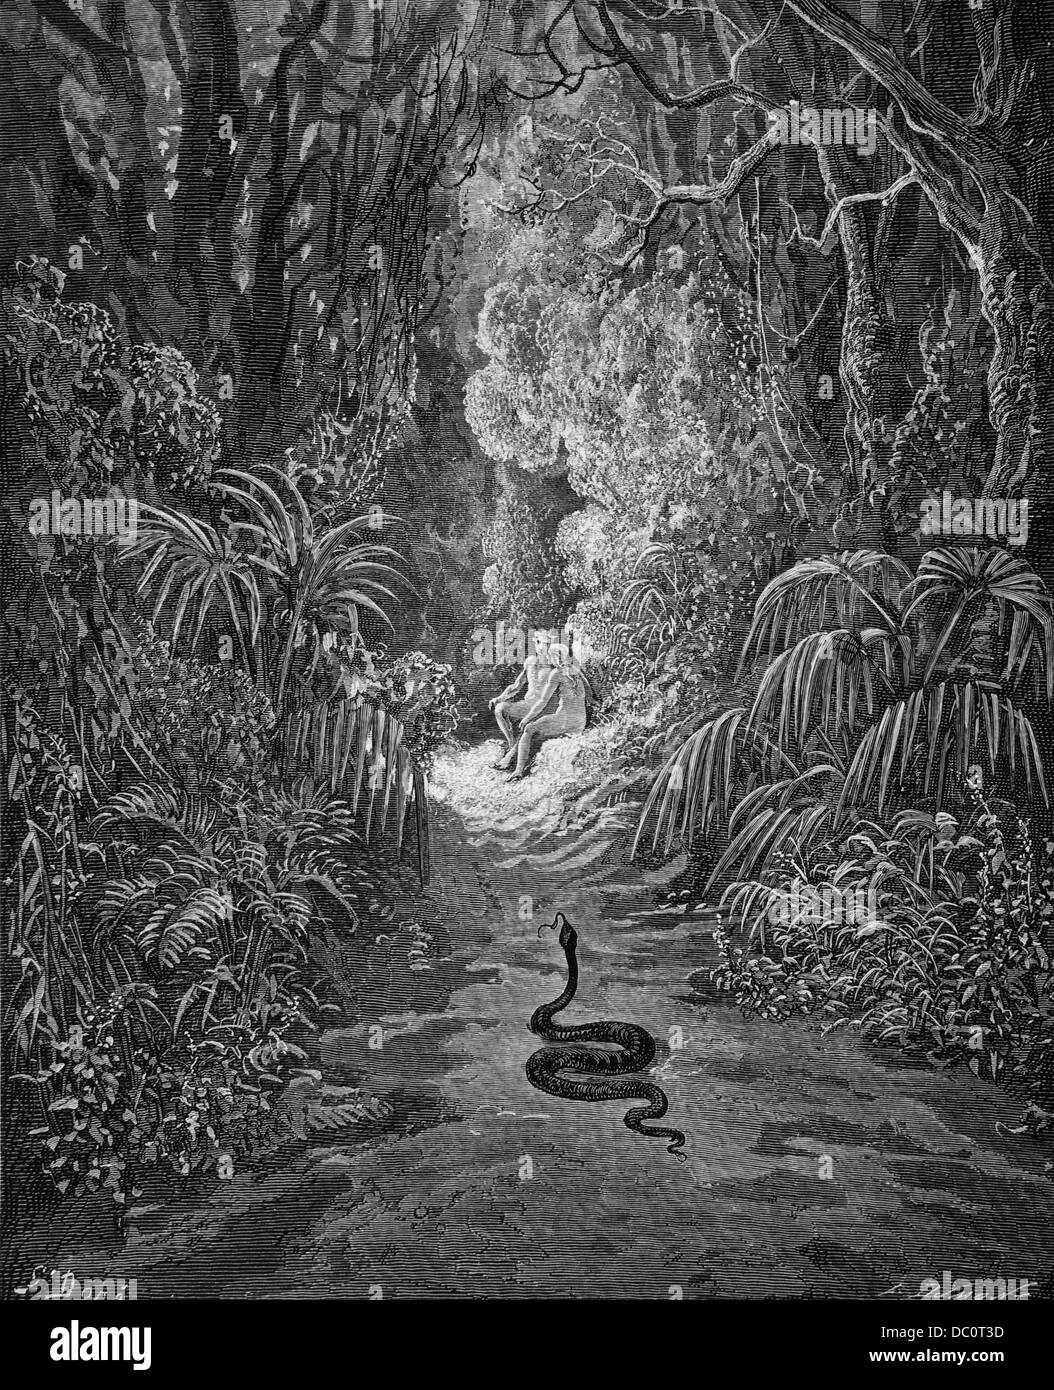 Adam And Eve And Snake Serpent In Garden Of Eden By Gustav Dore